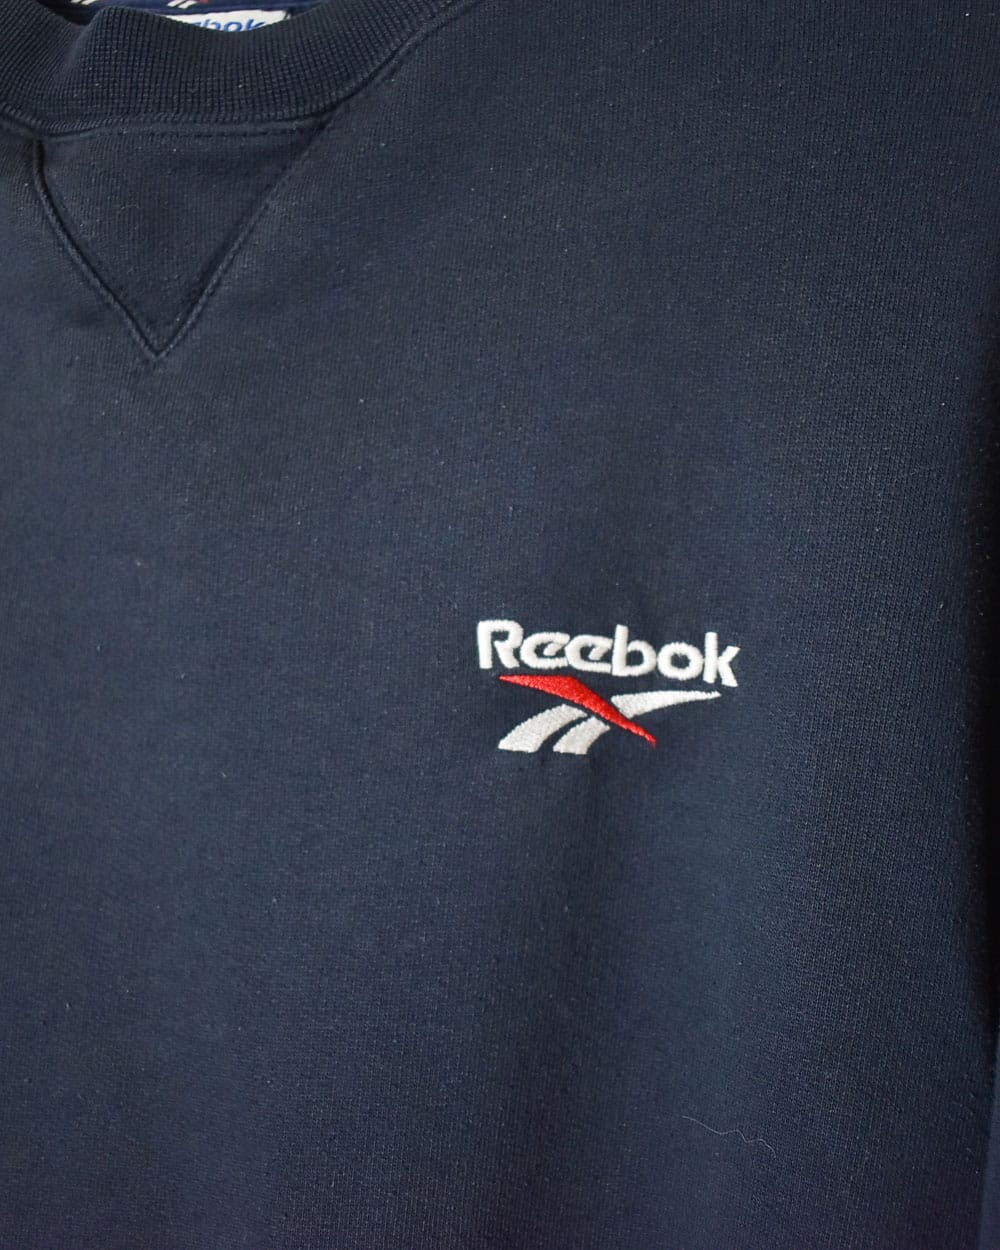 Navy Reebok Sweatshirt - Small